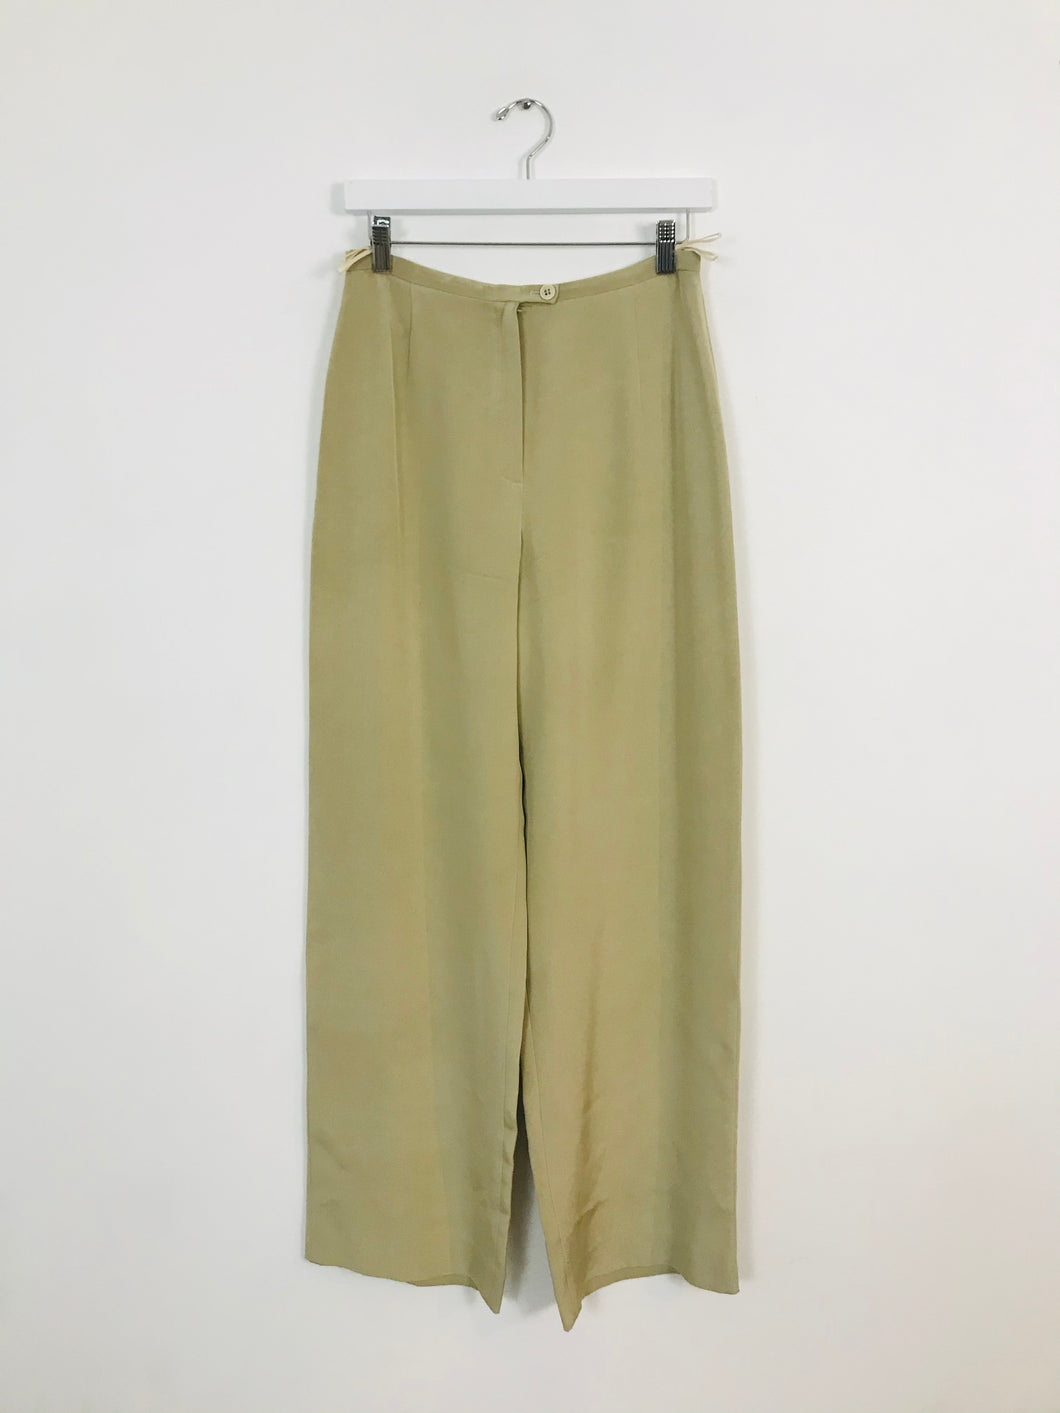 Cerruti 1881 Women’s 100% Silk Wide Leg Trouser | FR40 UK10-12 | Brown